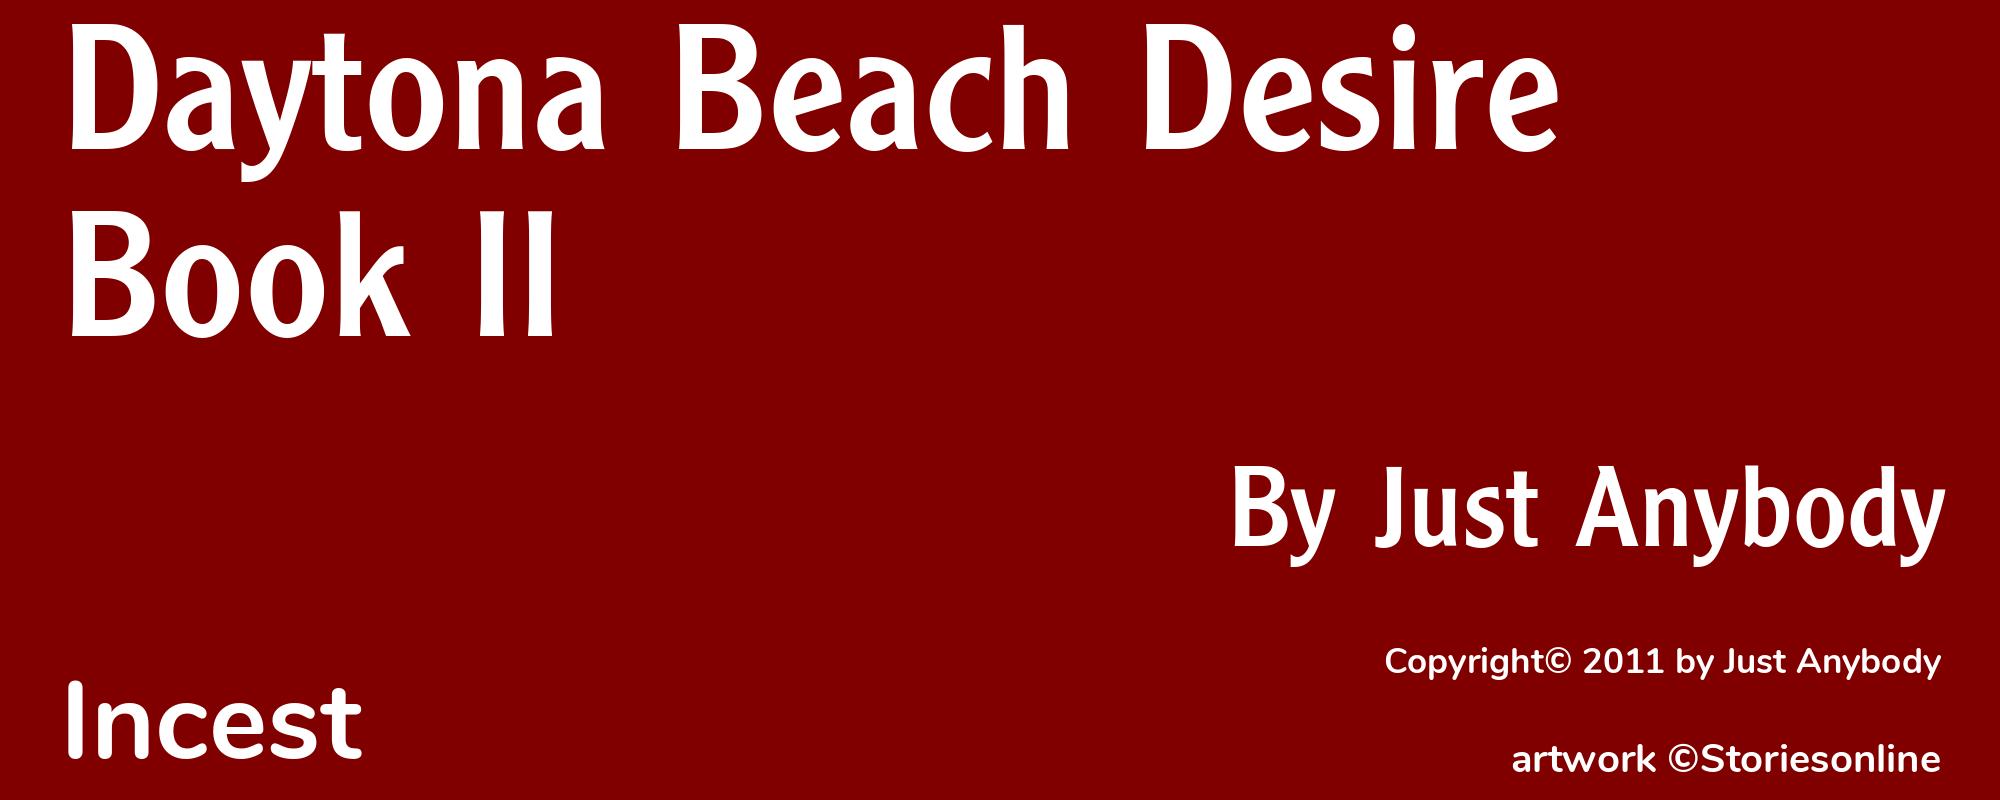 Daytona Beach Desire Book II - Cover